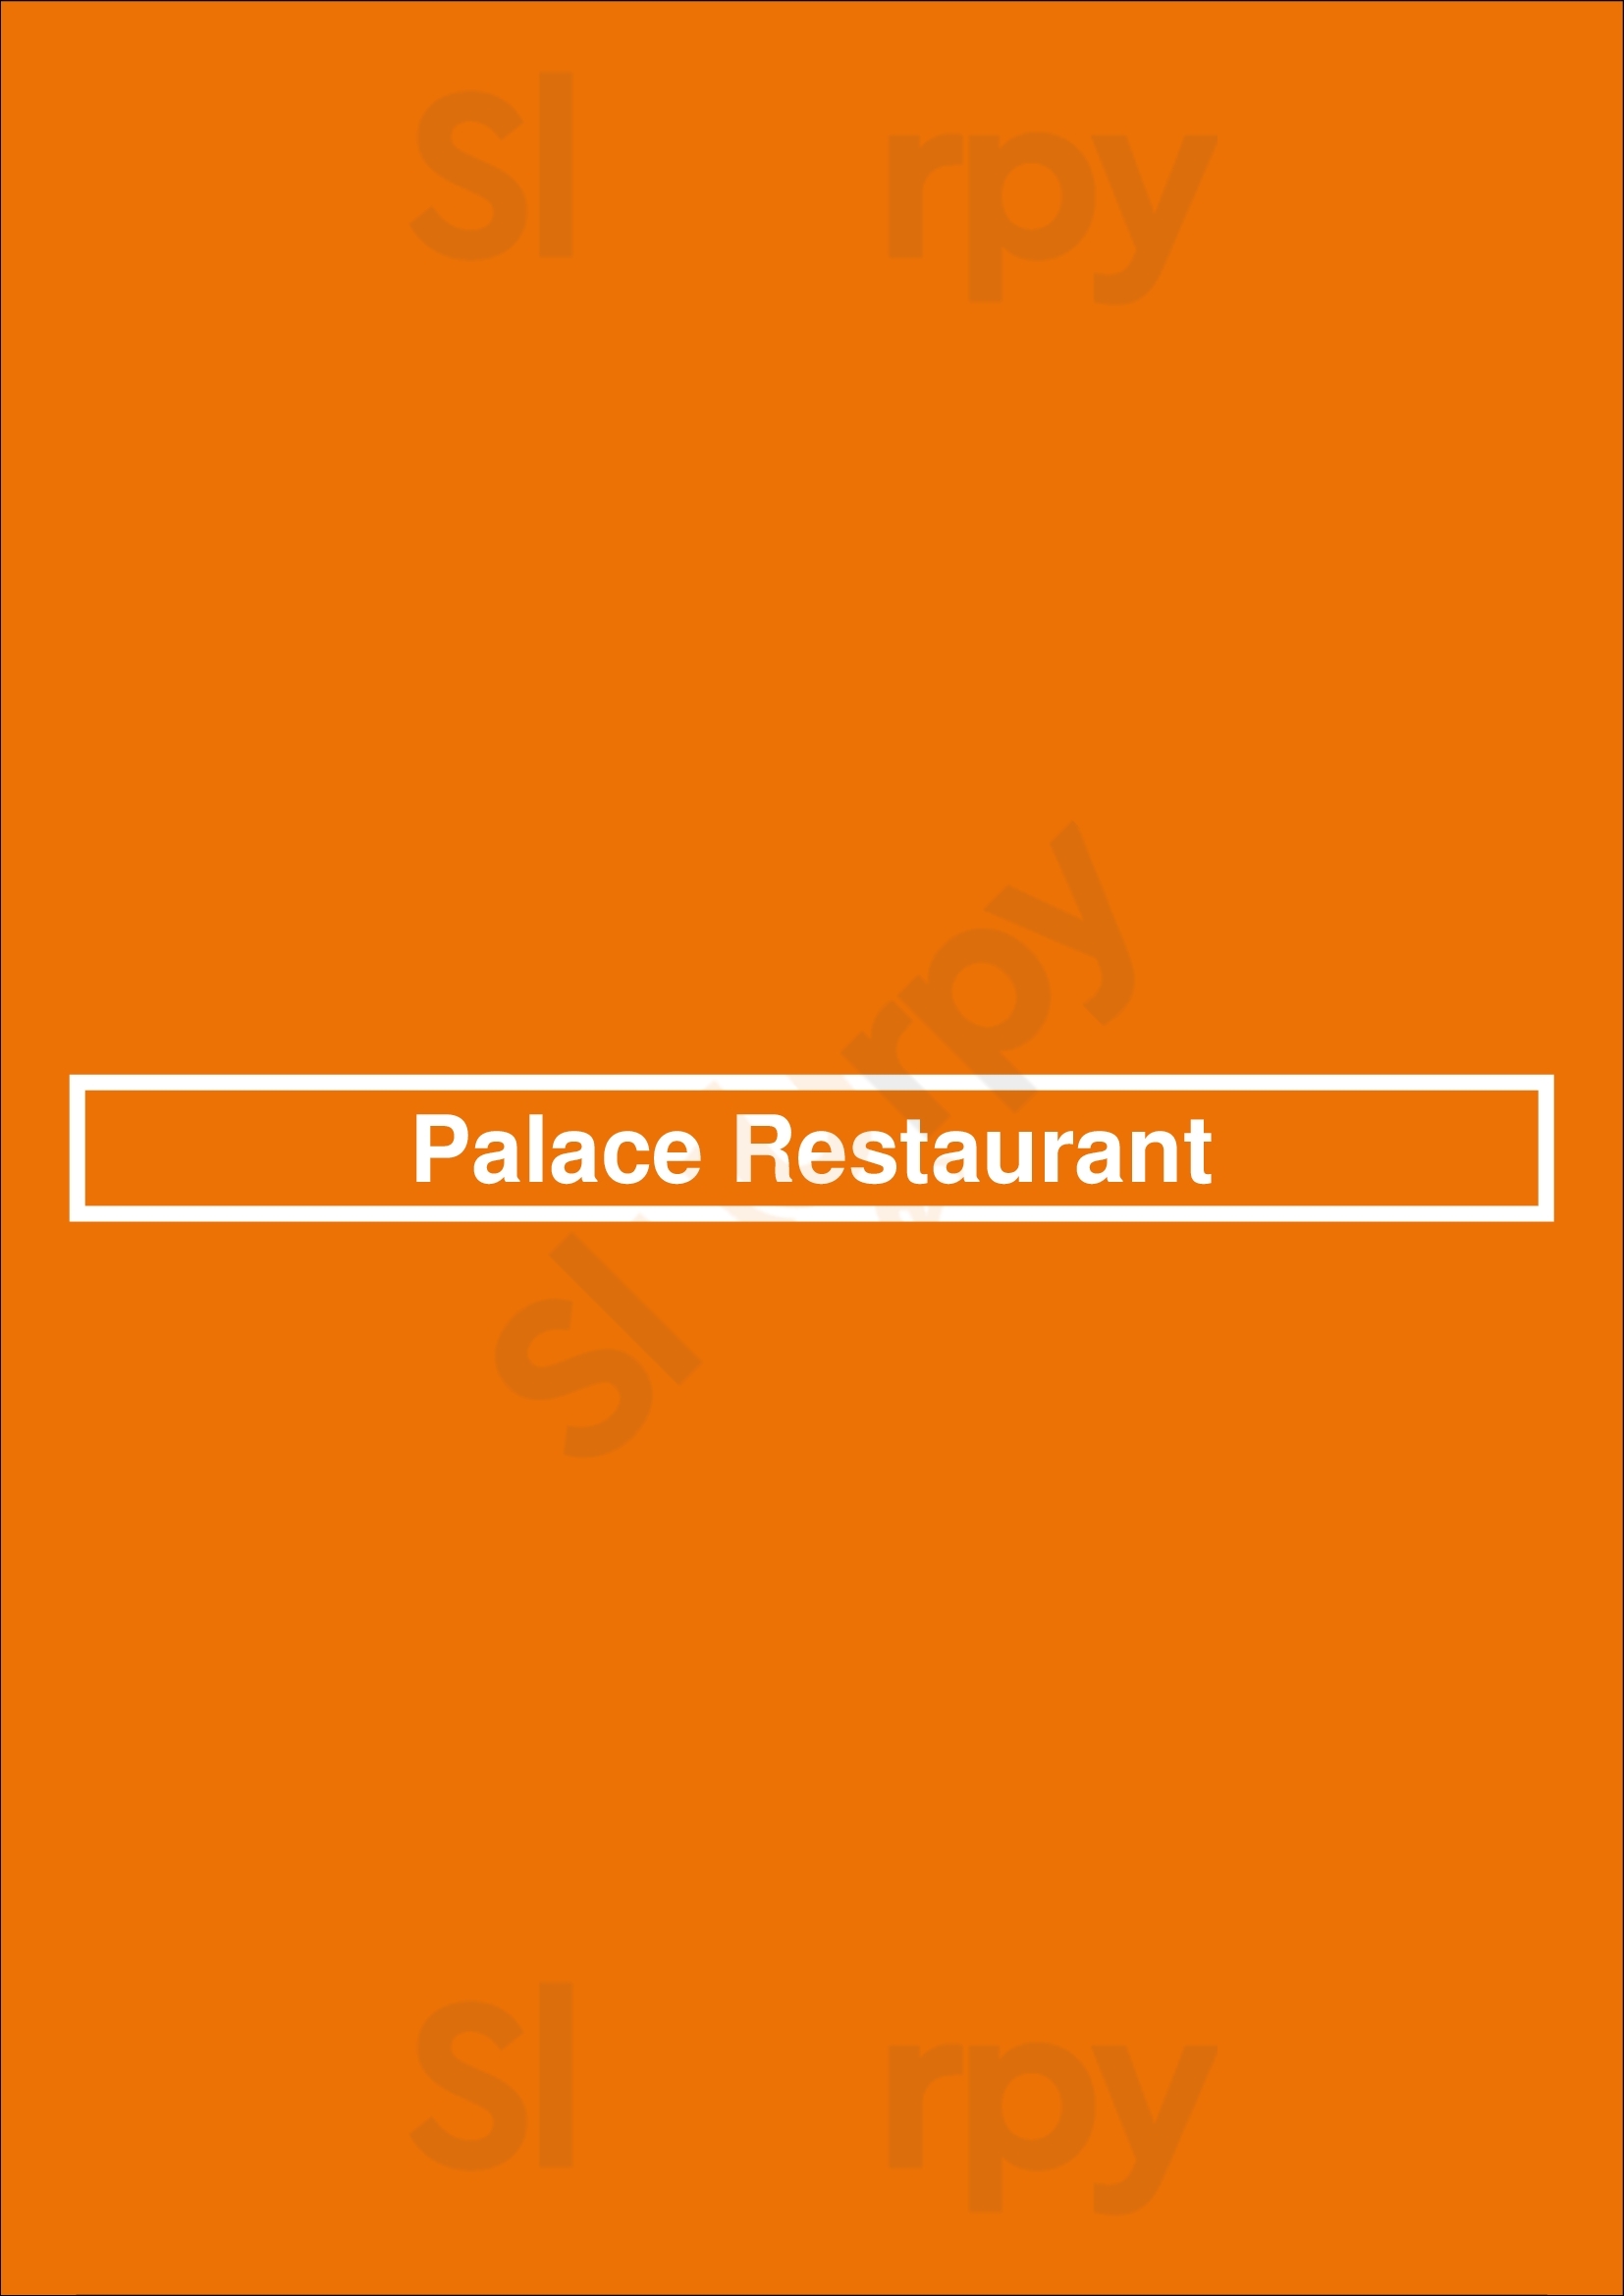 Palace Restaurant Northampton Menu - 1